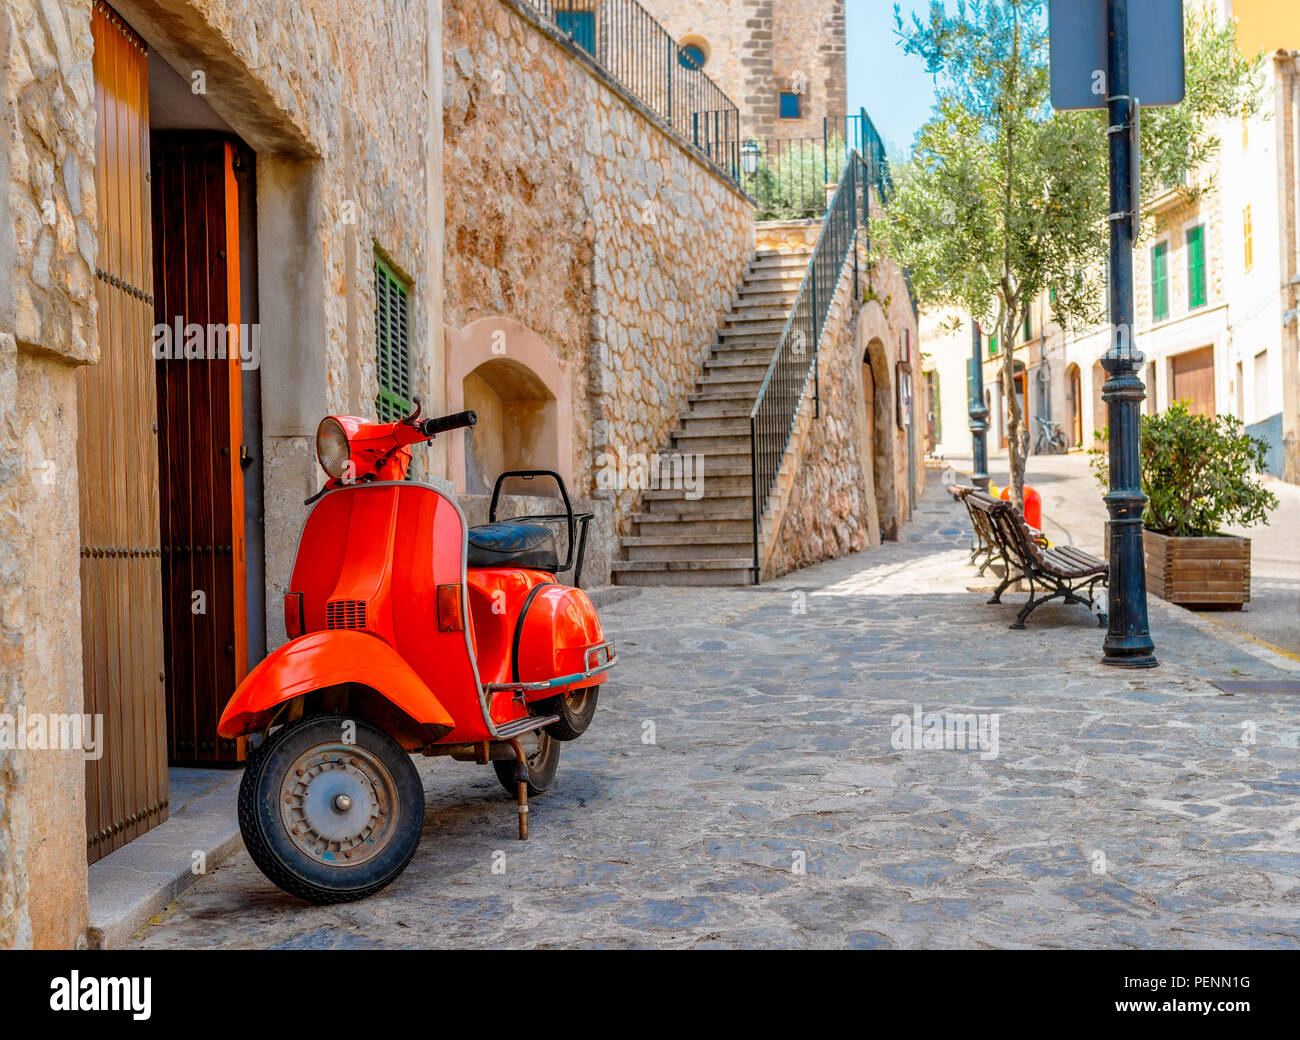 Vintage motocicleta roja estacionada en la histórica aldea española Foto de stock